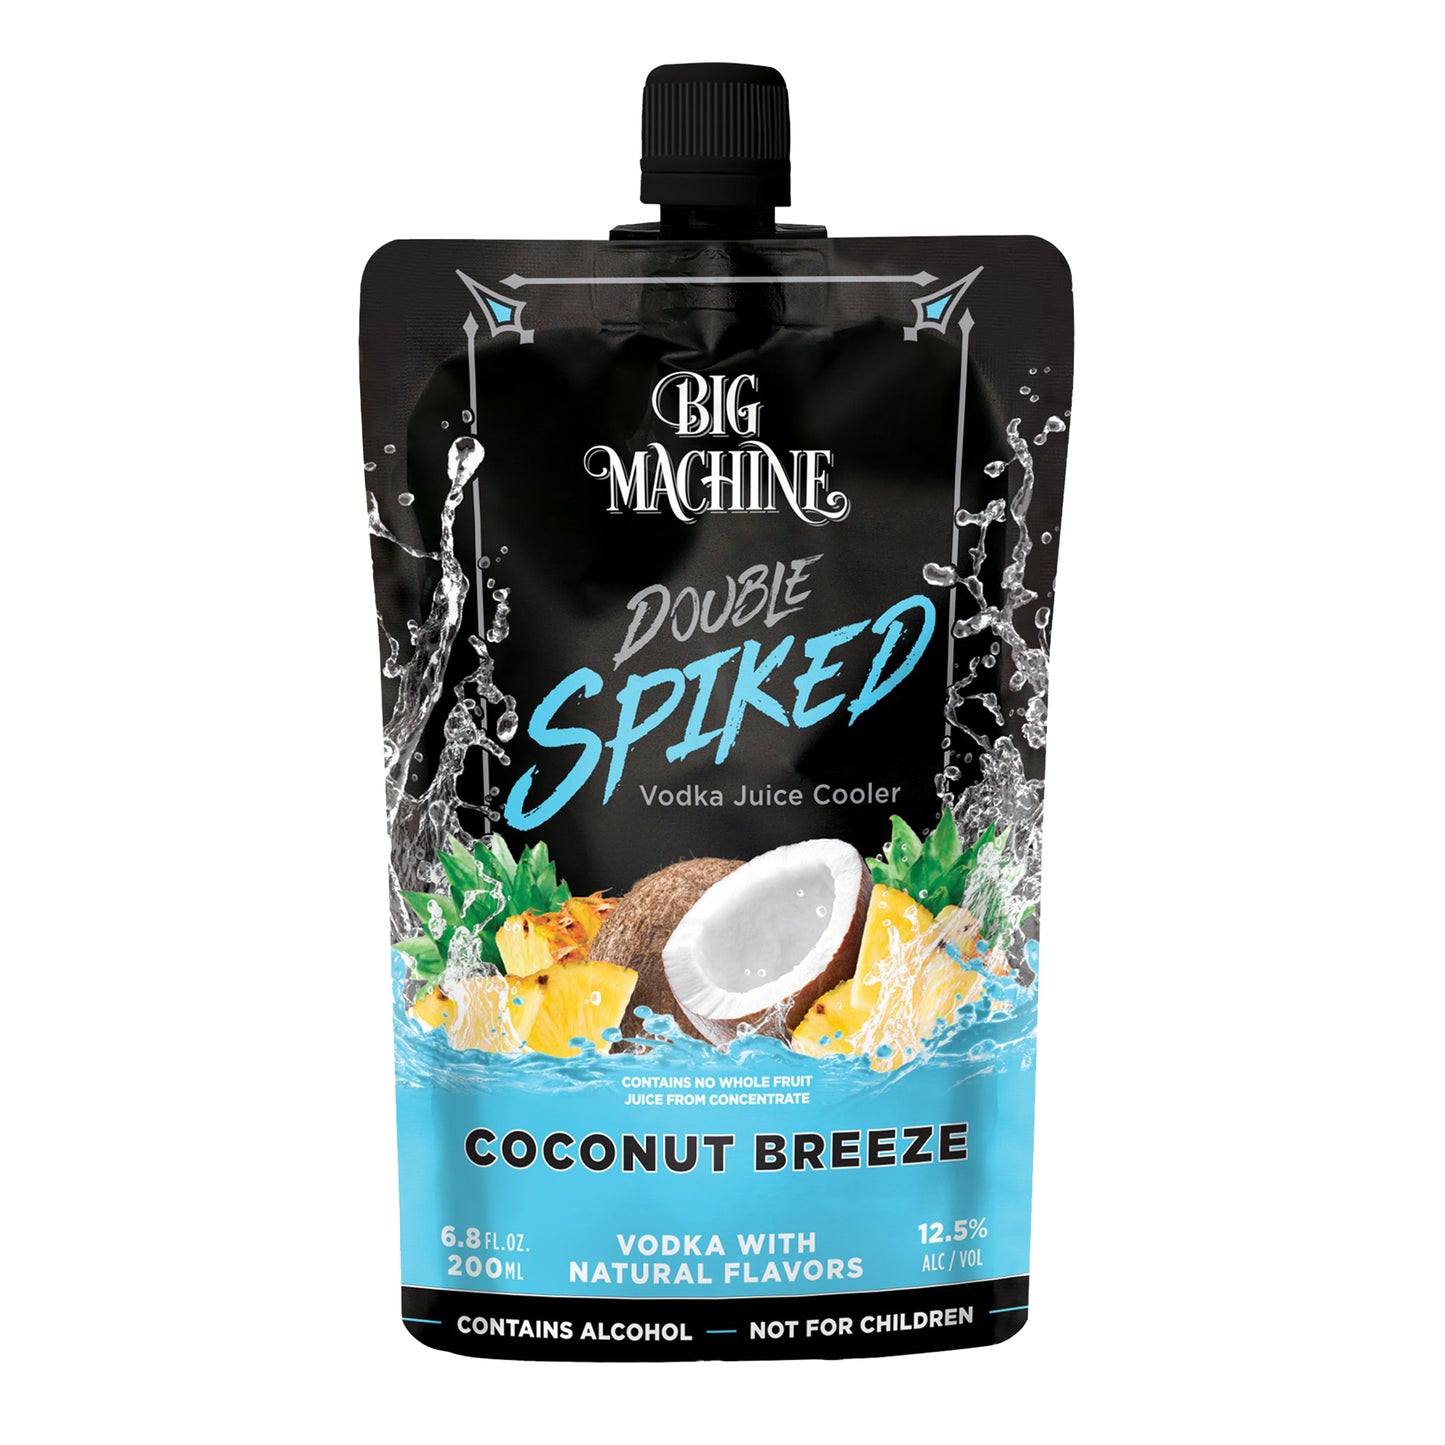 Double Spiked Vodka Juice Cooler Coconut Breeze - 24 Pack